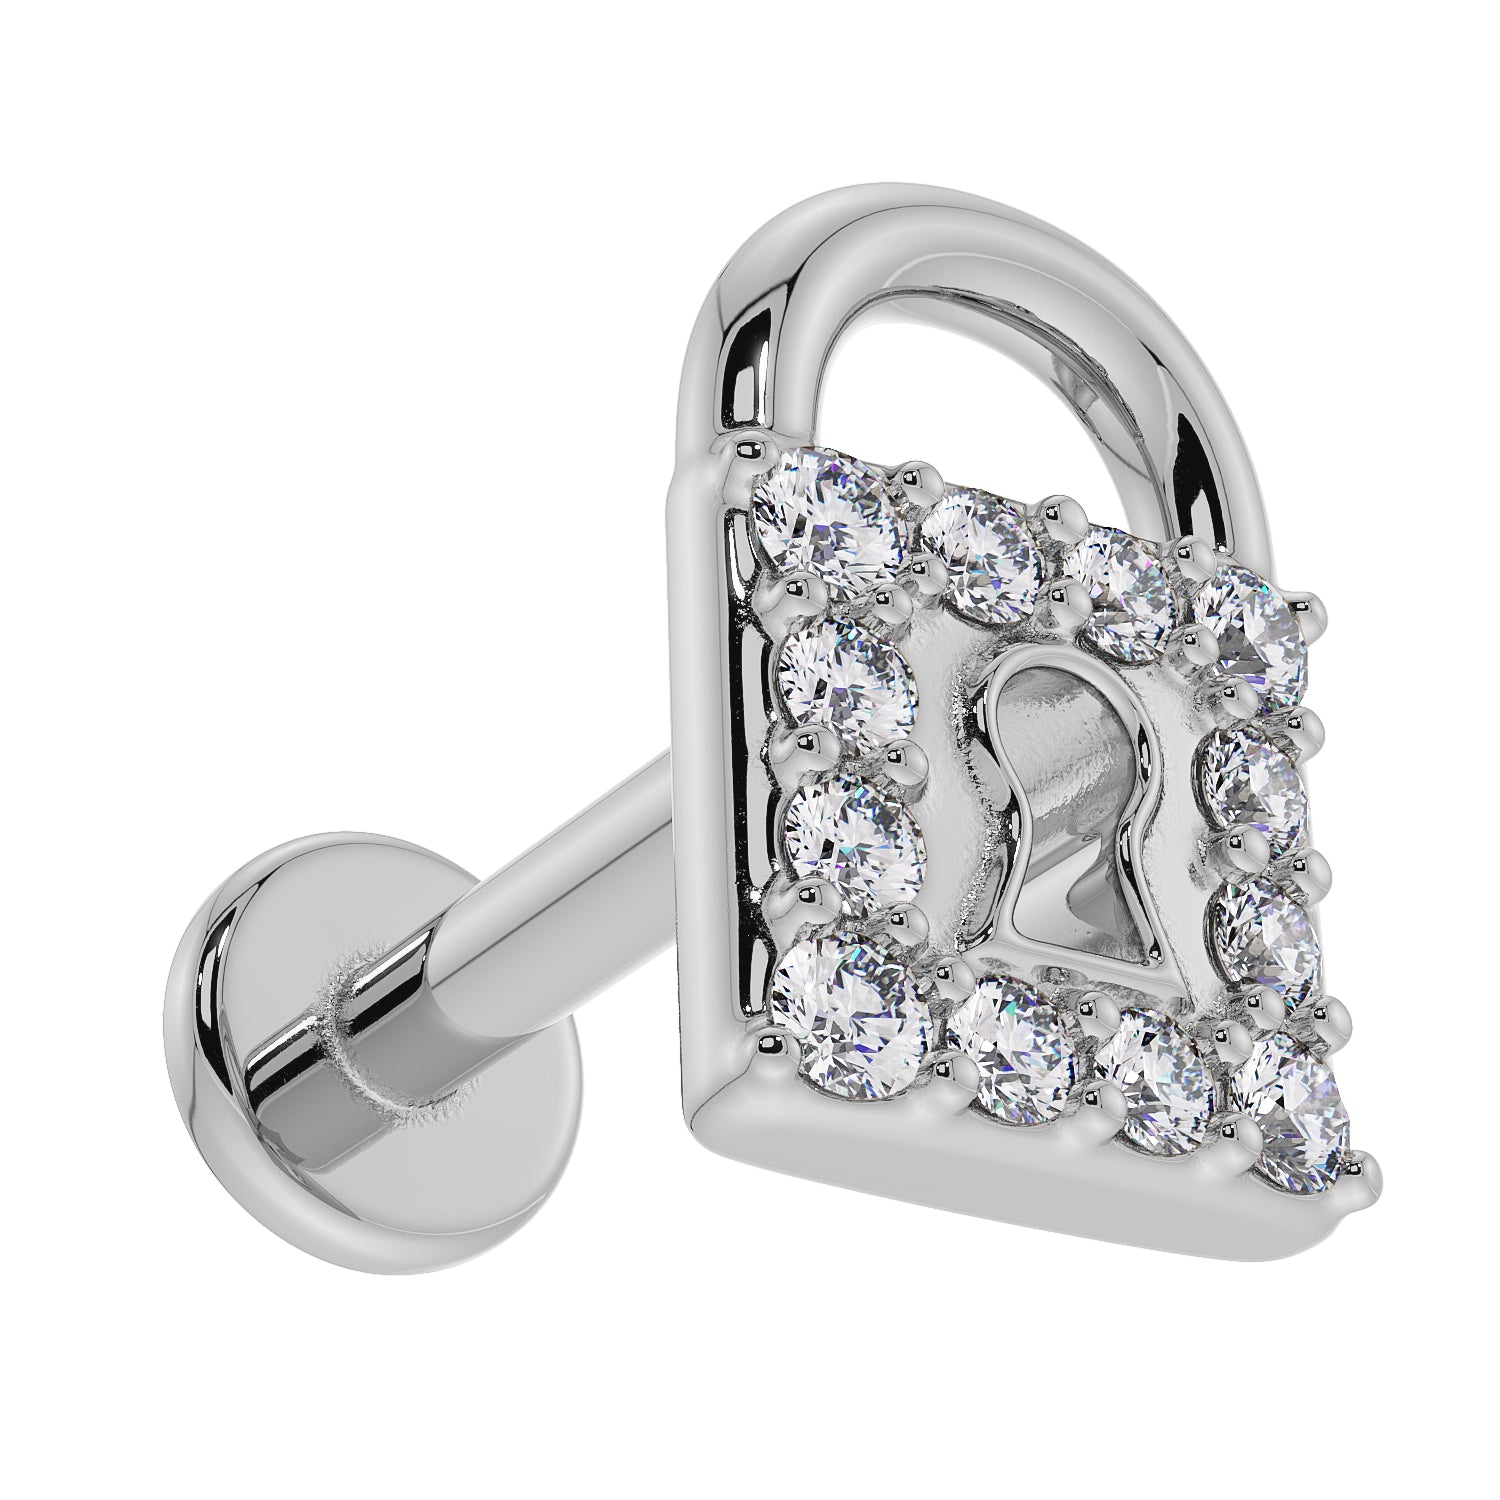 Lock Diamond 14K Gold Flat Back Earring